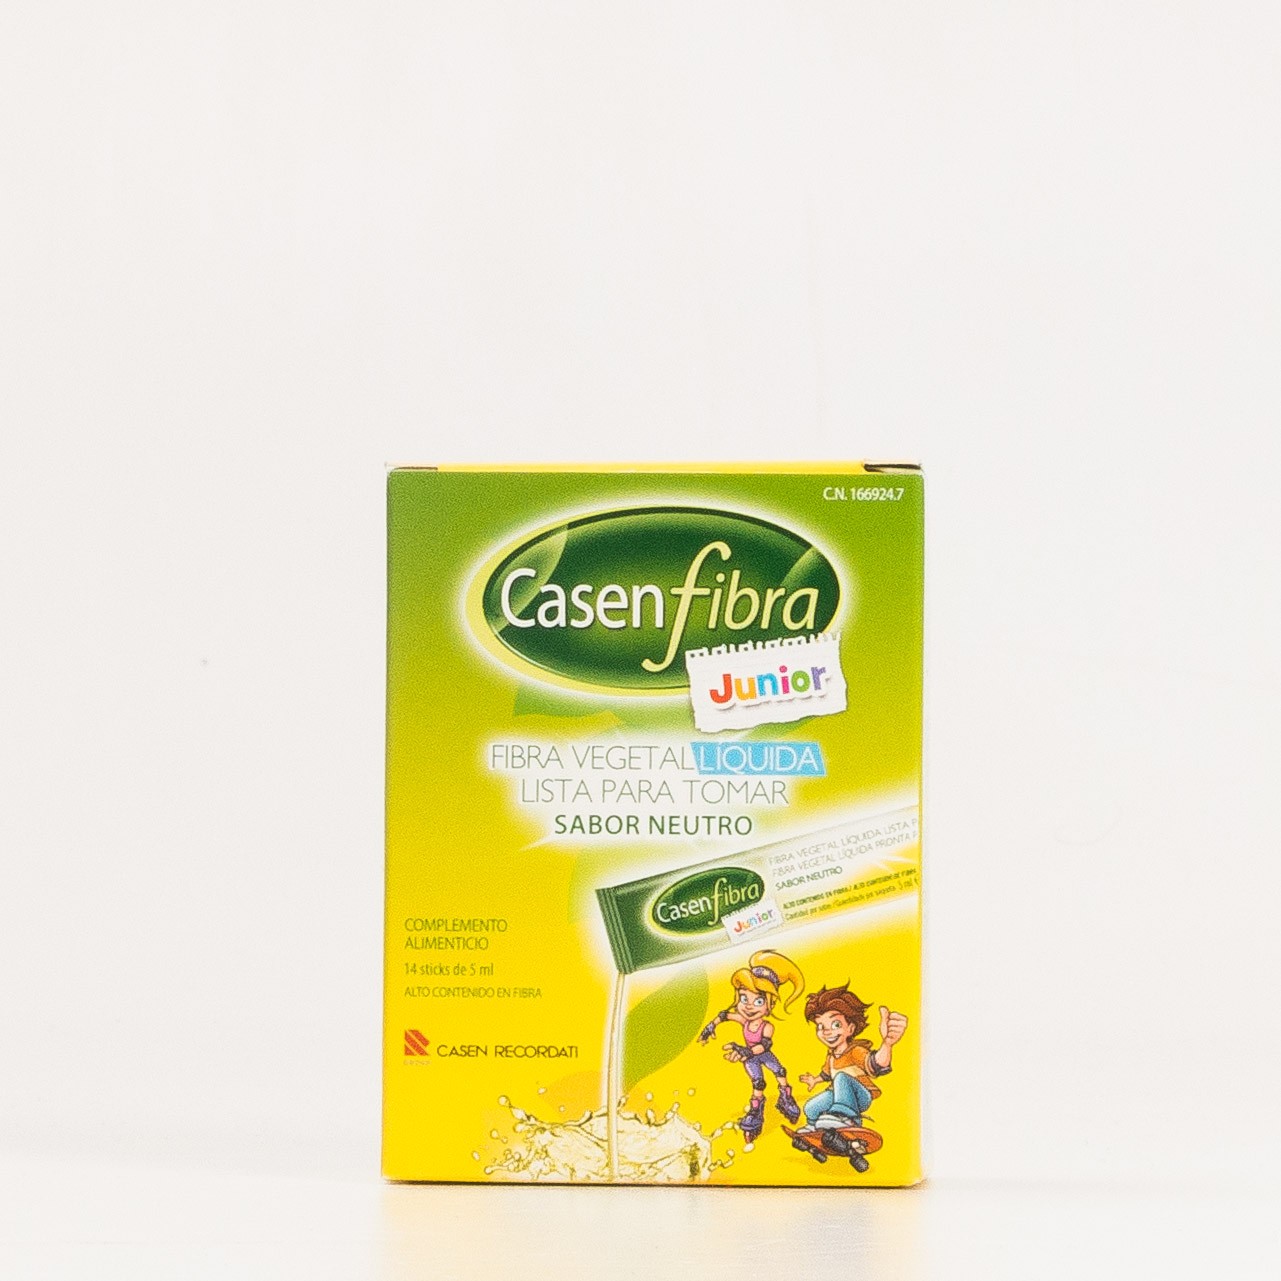 Casenfibra Junior Fibra Vegetal Líquida, 14 sachês x 5 ml.